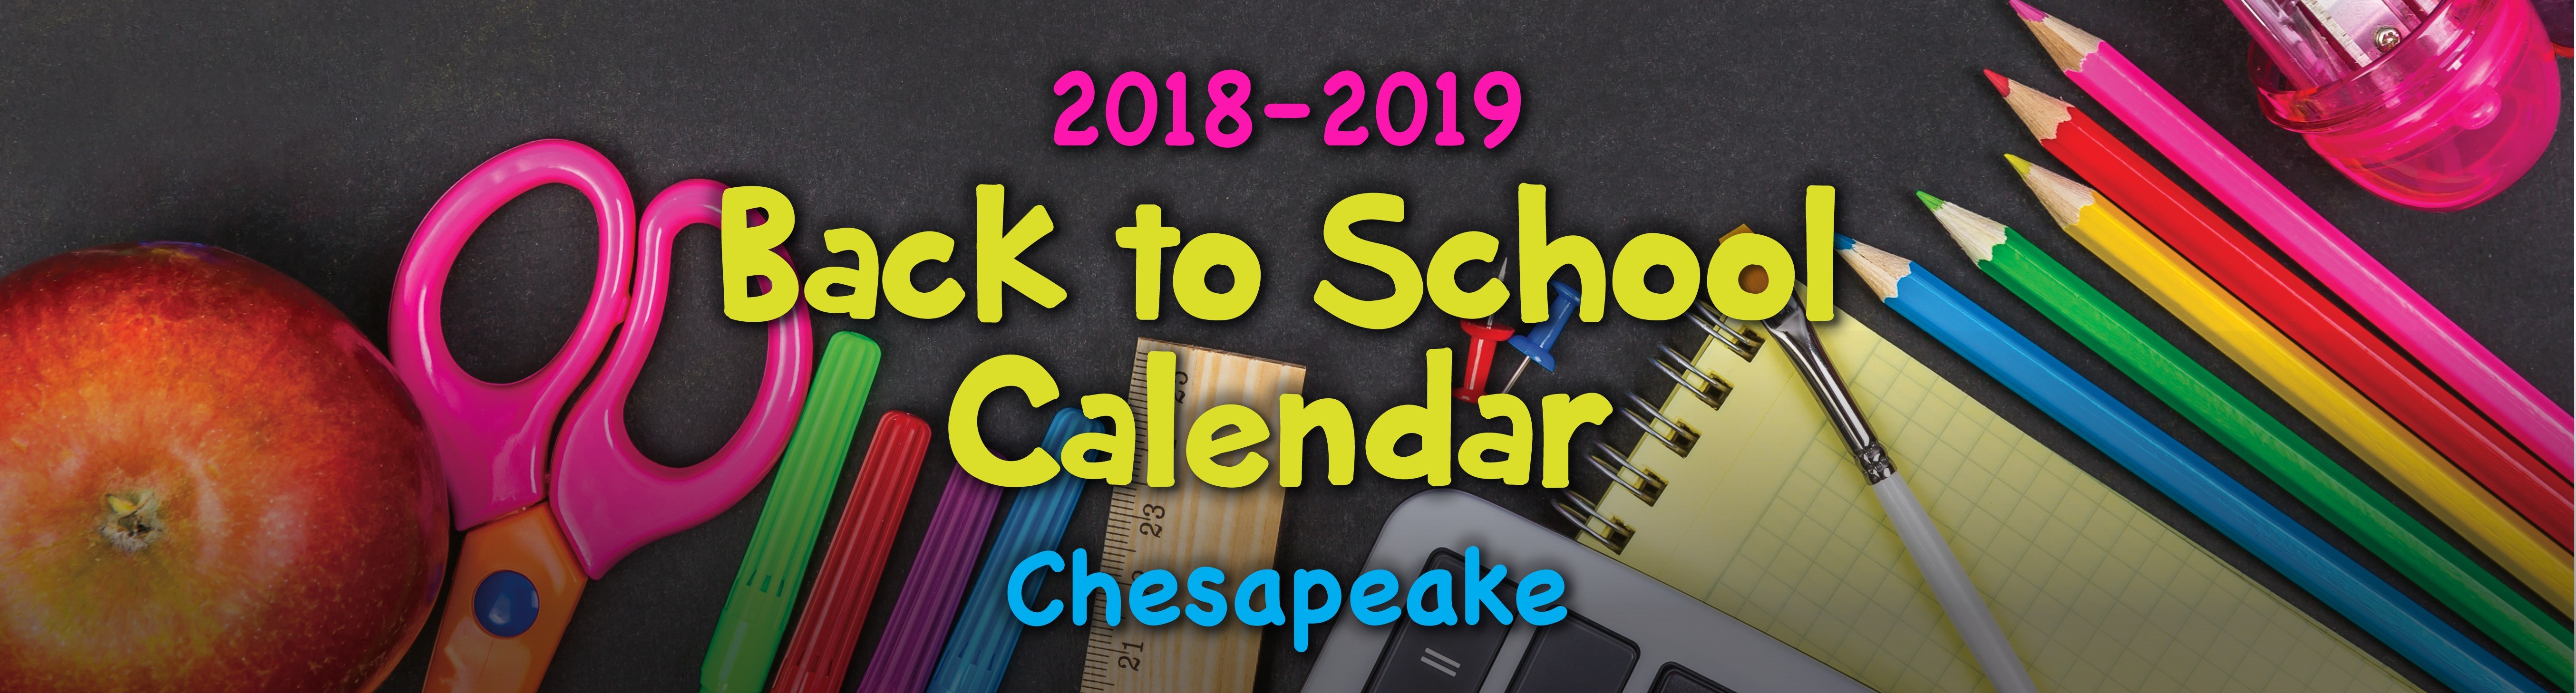 dbe-proposed-2025-school-calendar-selectiondc